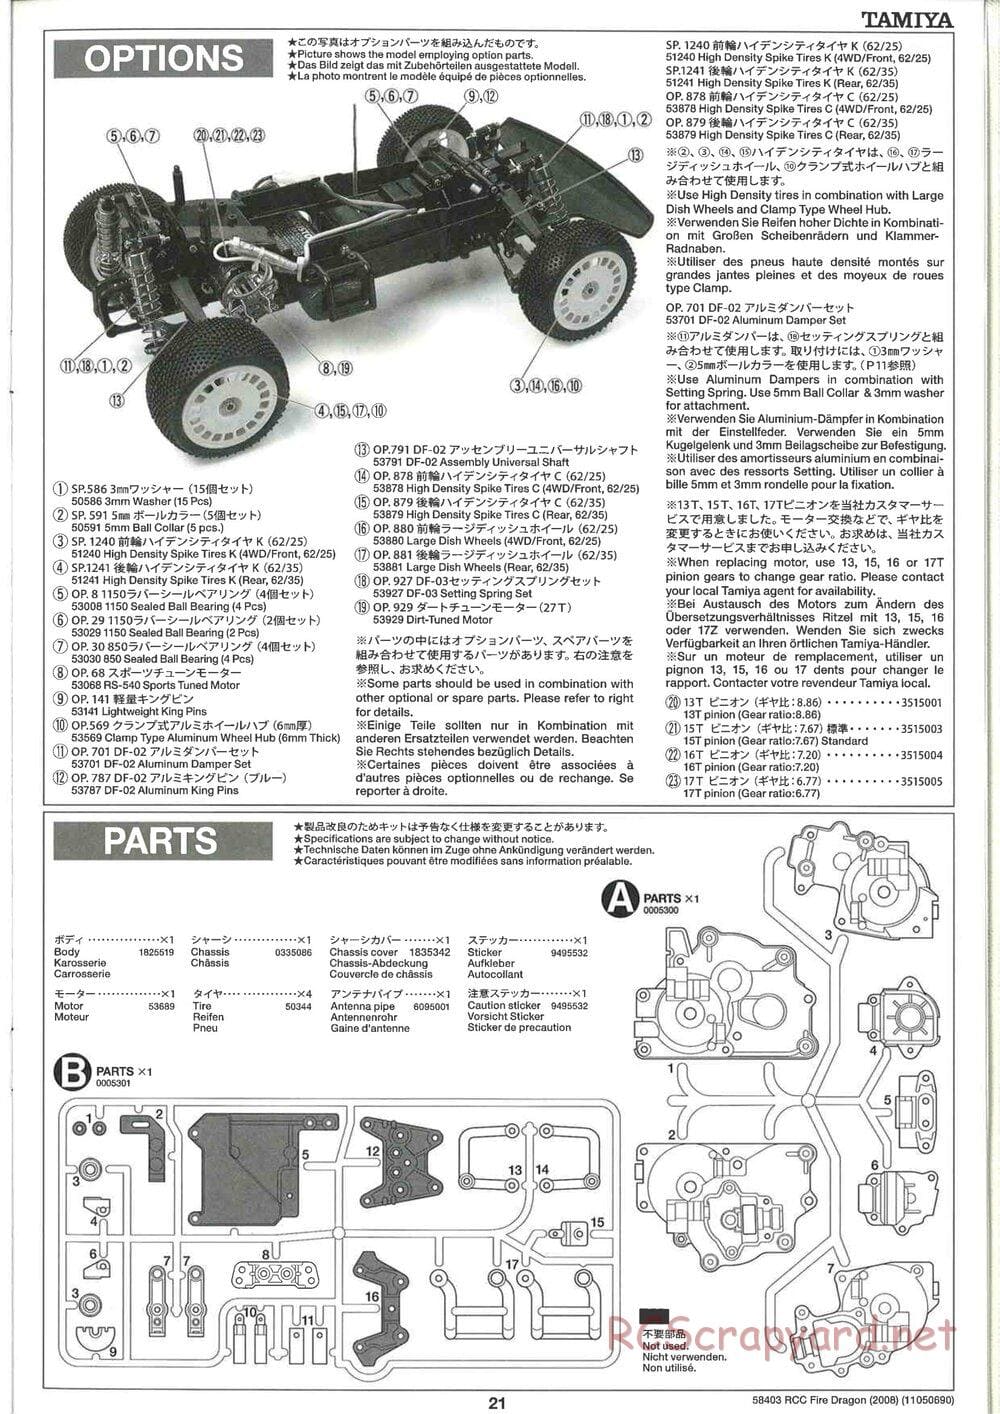 Tamiya - Fire Dragon 2008 - TS2 Chassis - Manual - Page 21